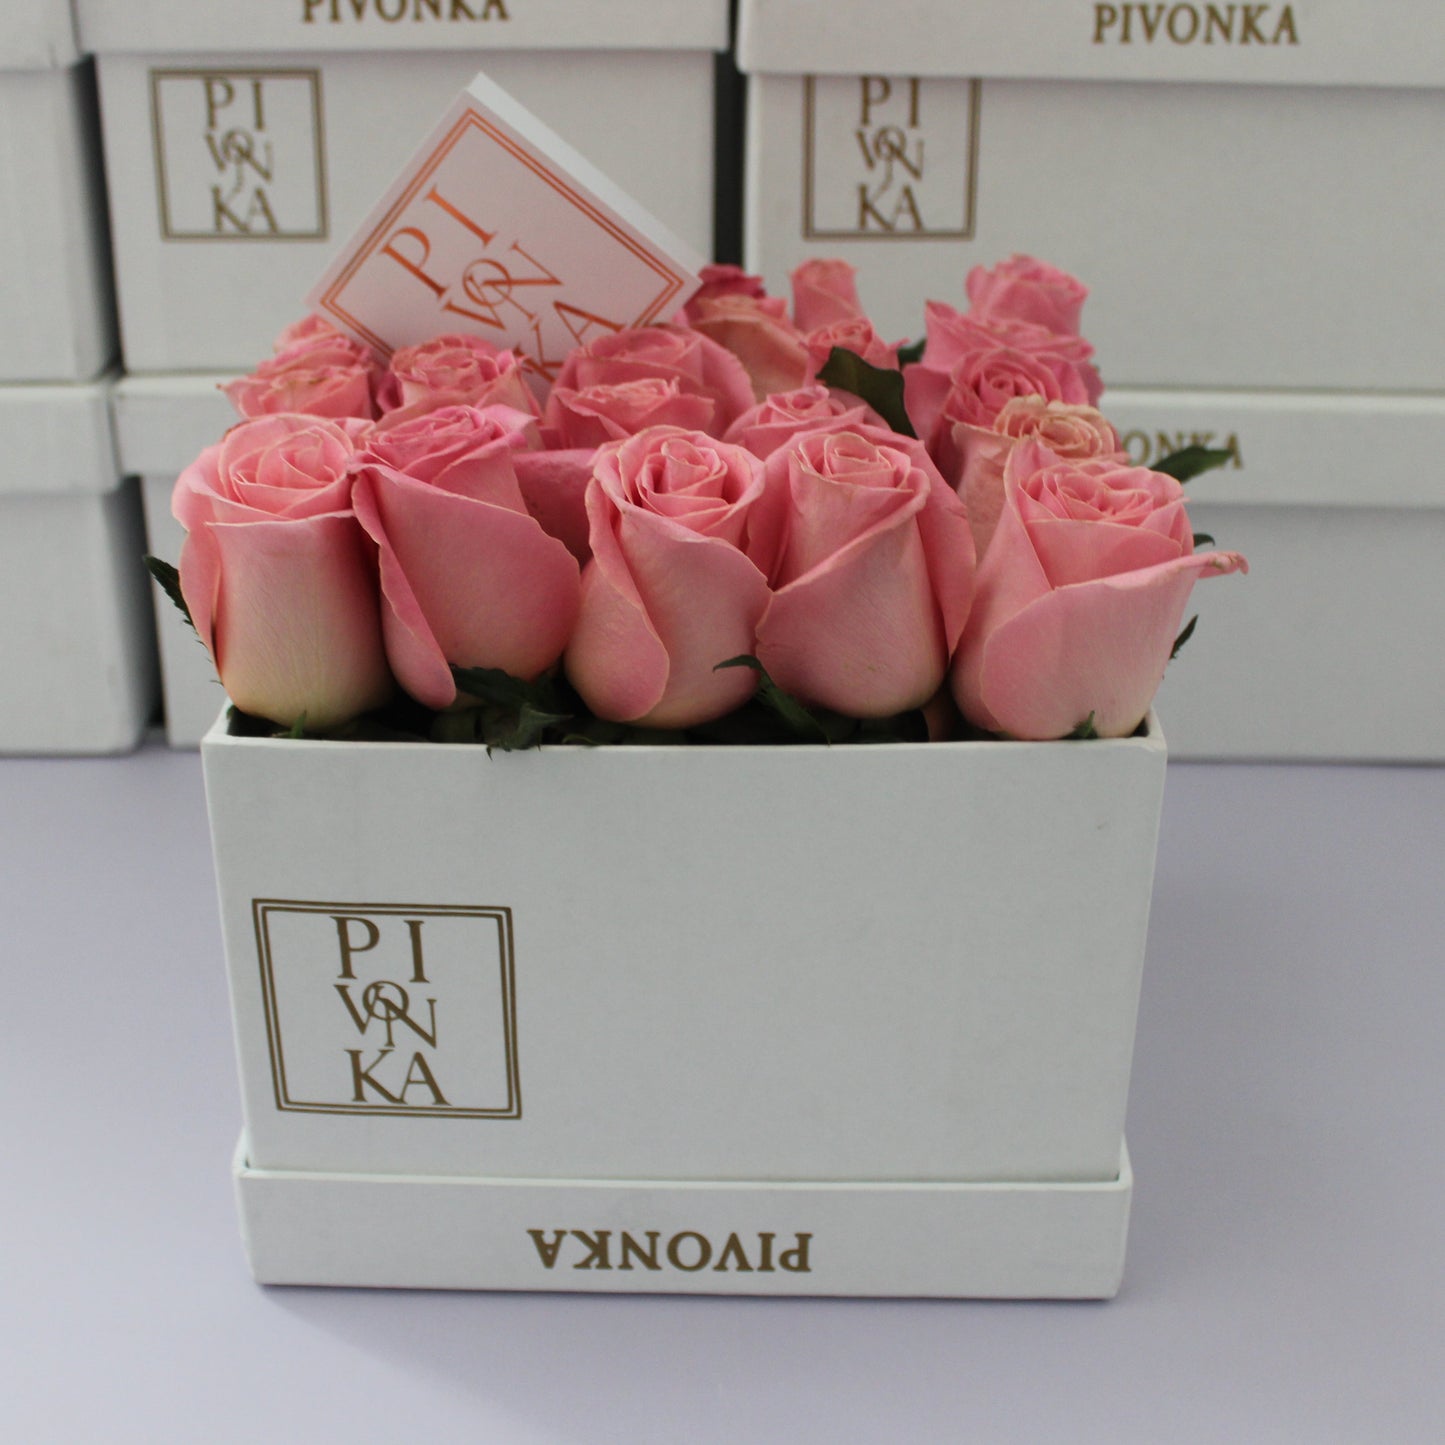 Pivonka Flores. Arreglo cuadrangular de 25 rosas rosas en base blanca